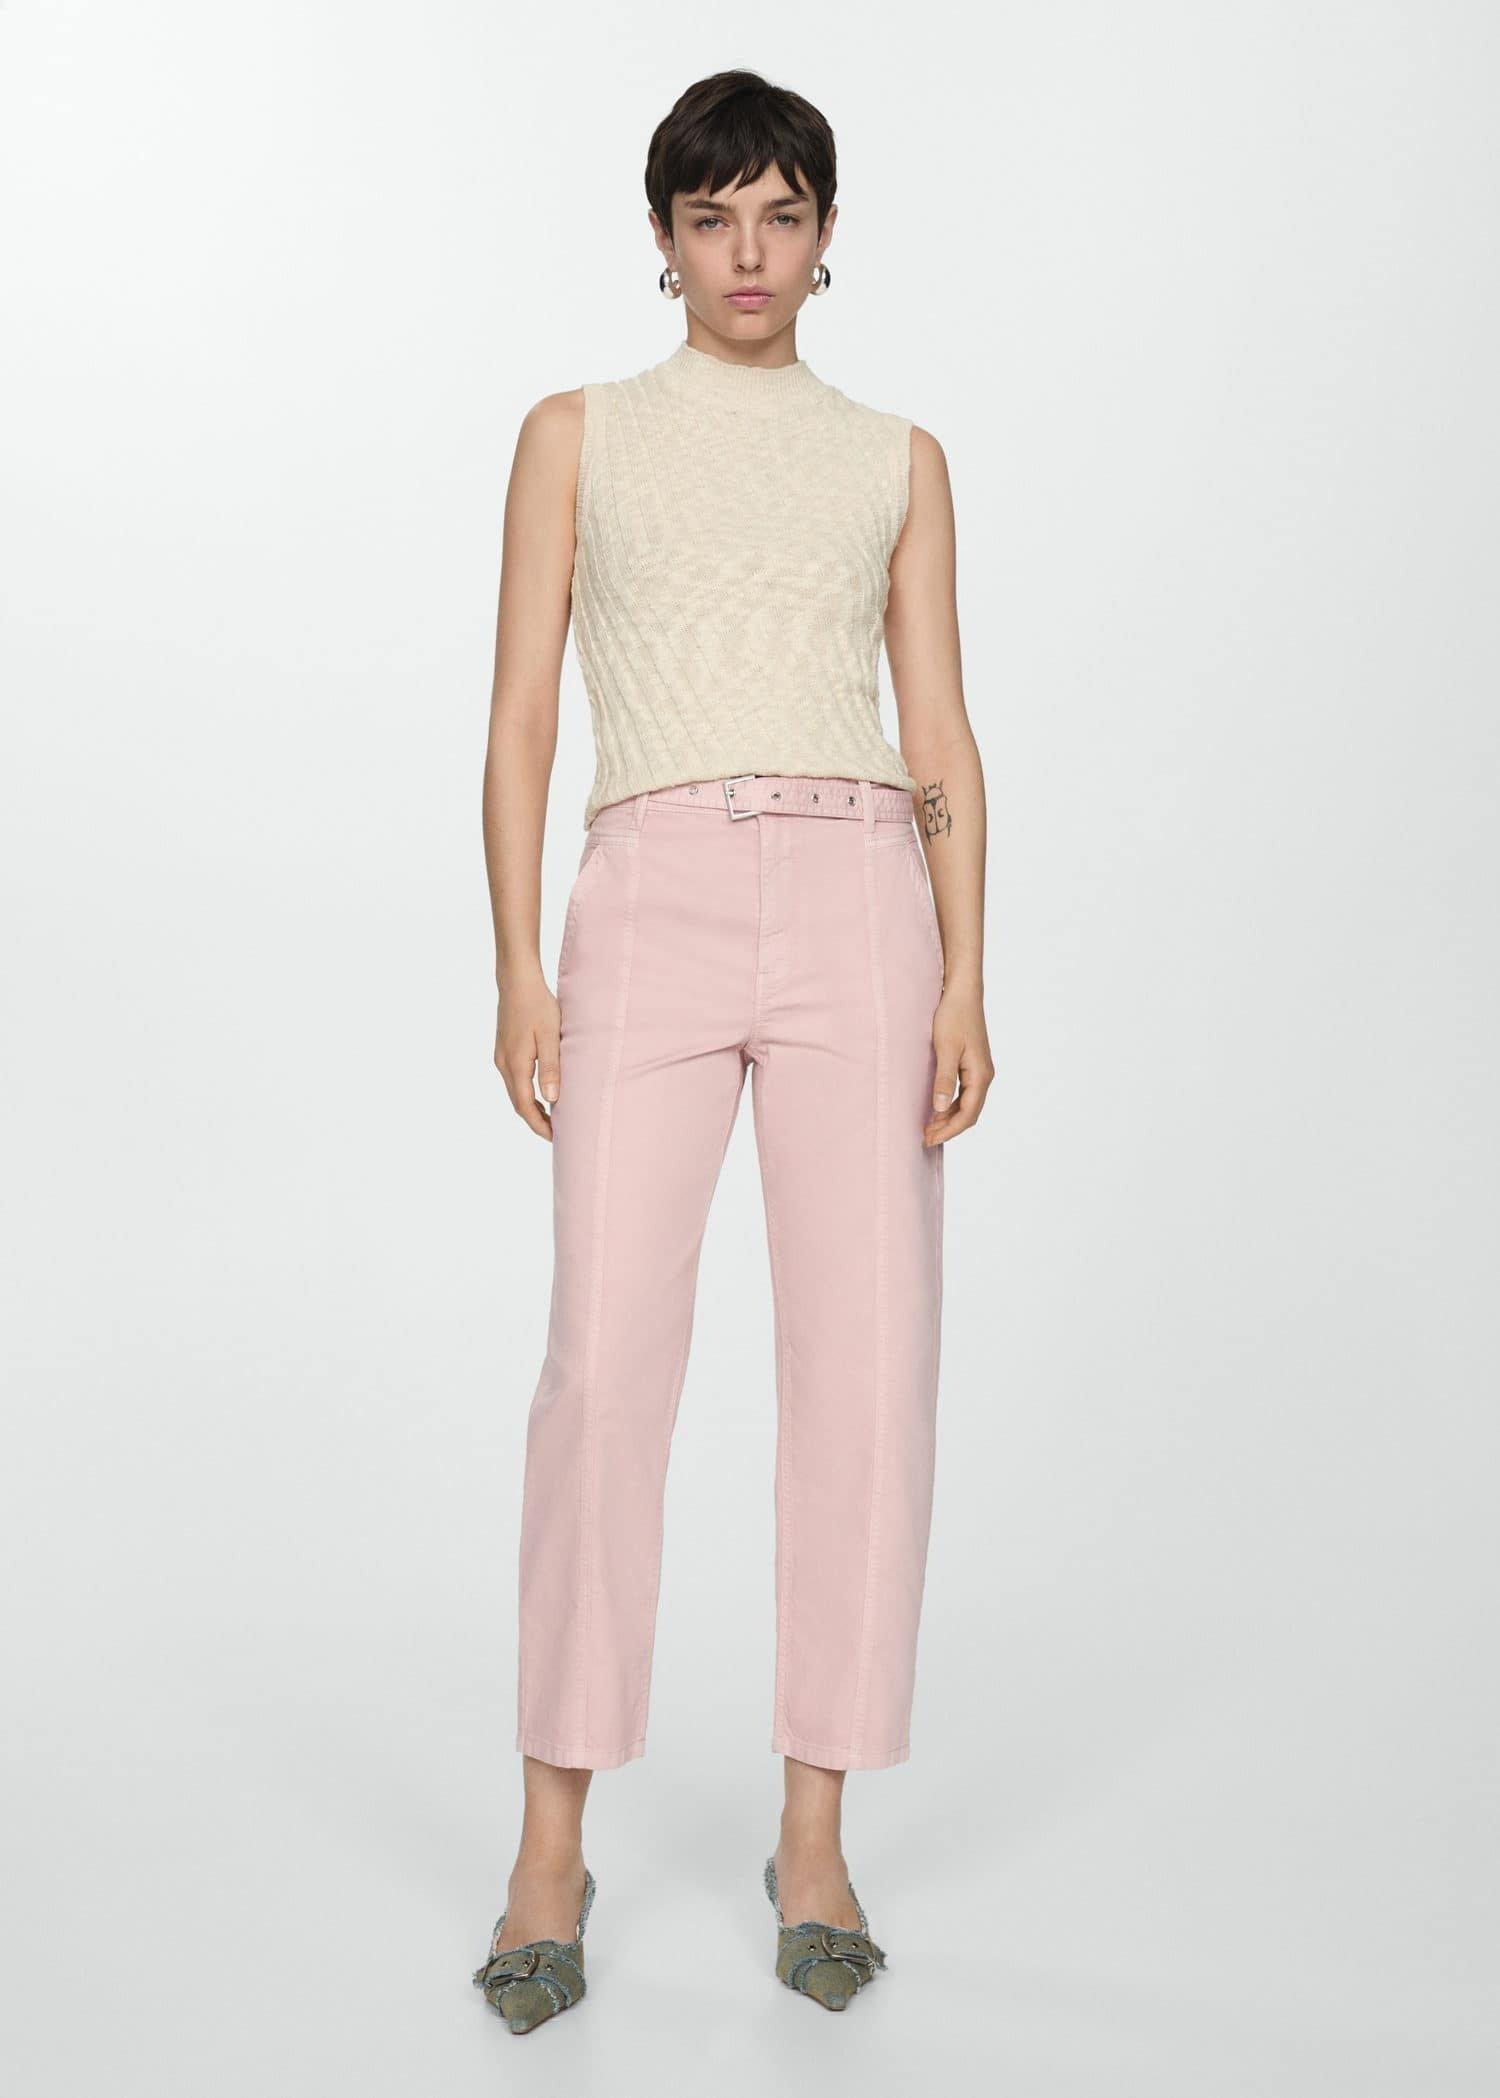 Mango - Pink Cuffed Belt Slouchy Jeans